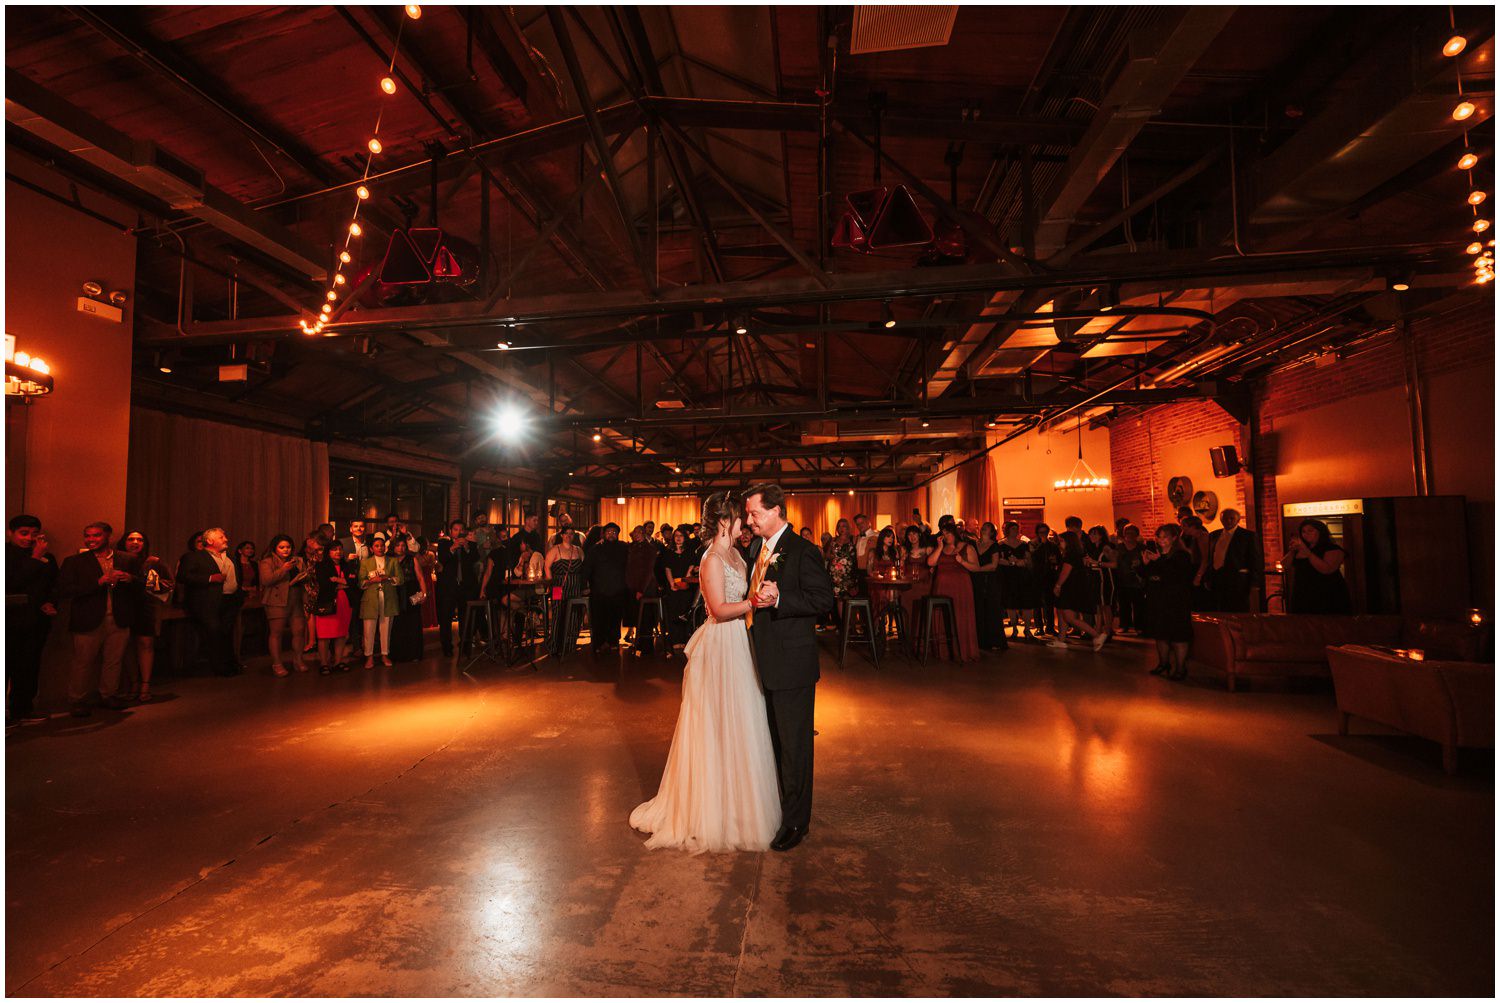 Ovation Chicago Wedding Photos - First dance